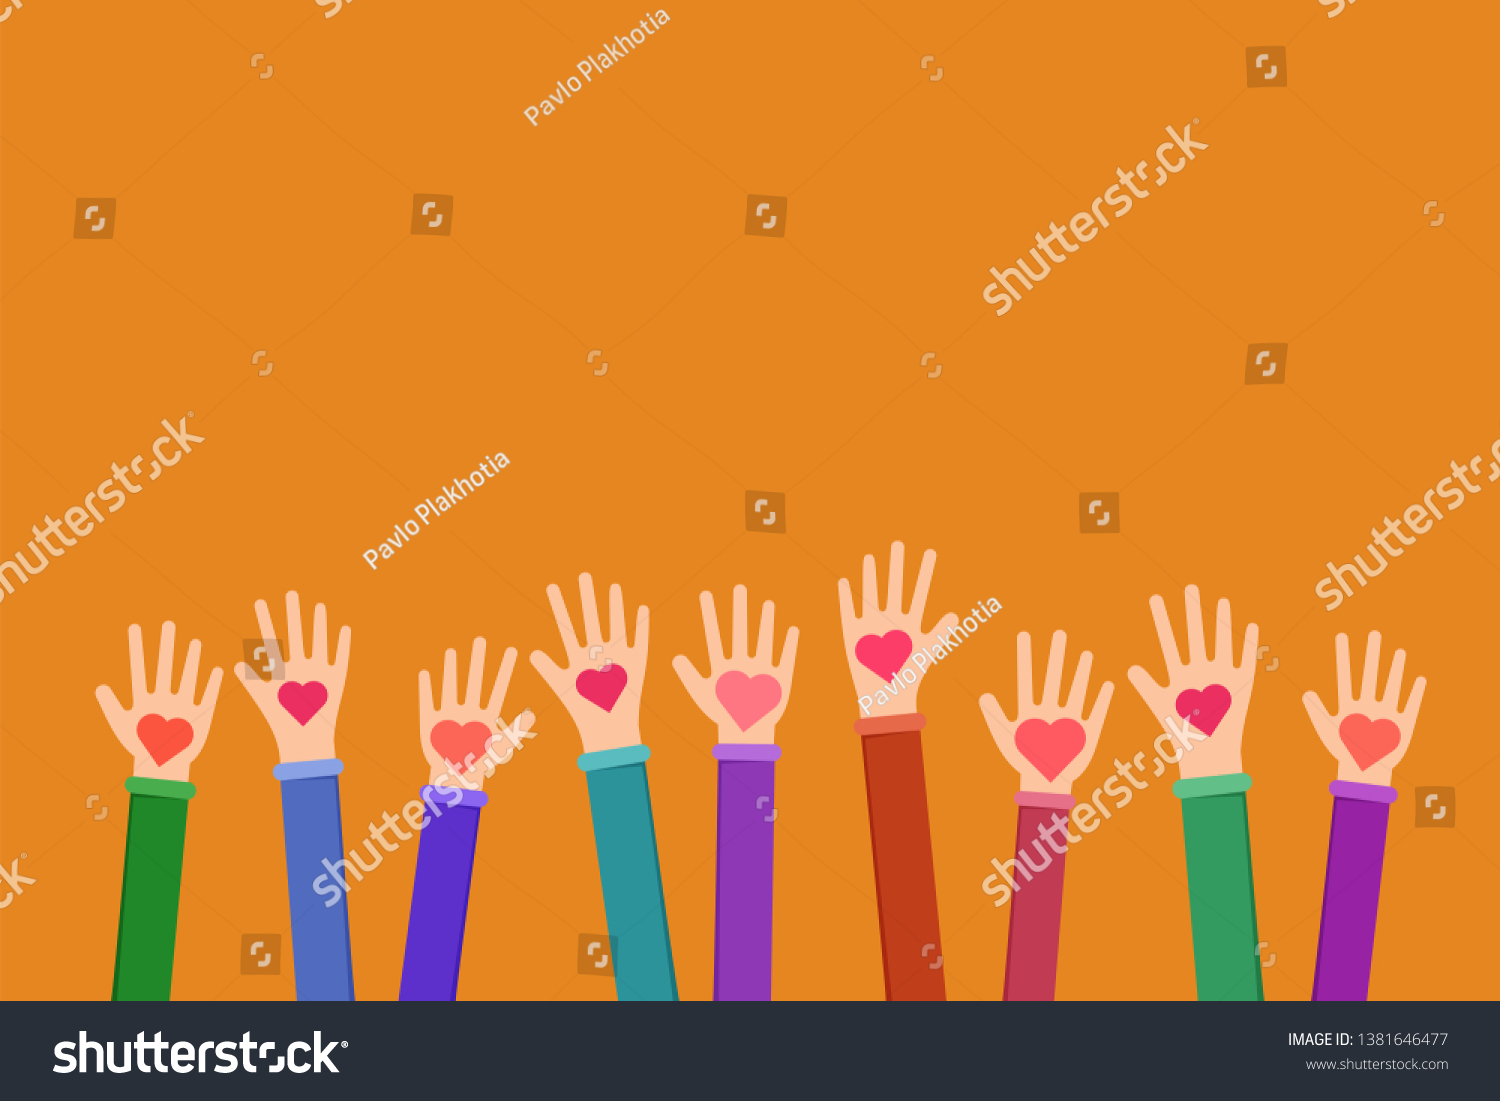 SVG of Community charitable work symbol flat illustration. Cartoon hands holding hearts on orange background. Charity fund, volunteering, fundraising organization uniting efforts for humanitarian aid svg